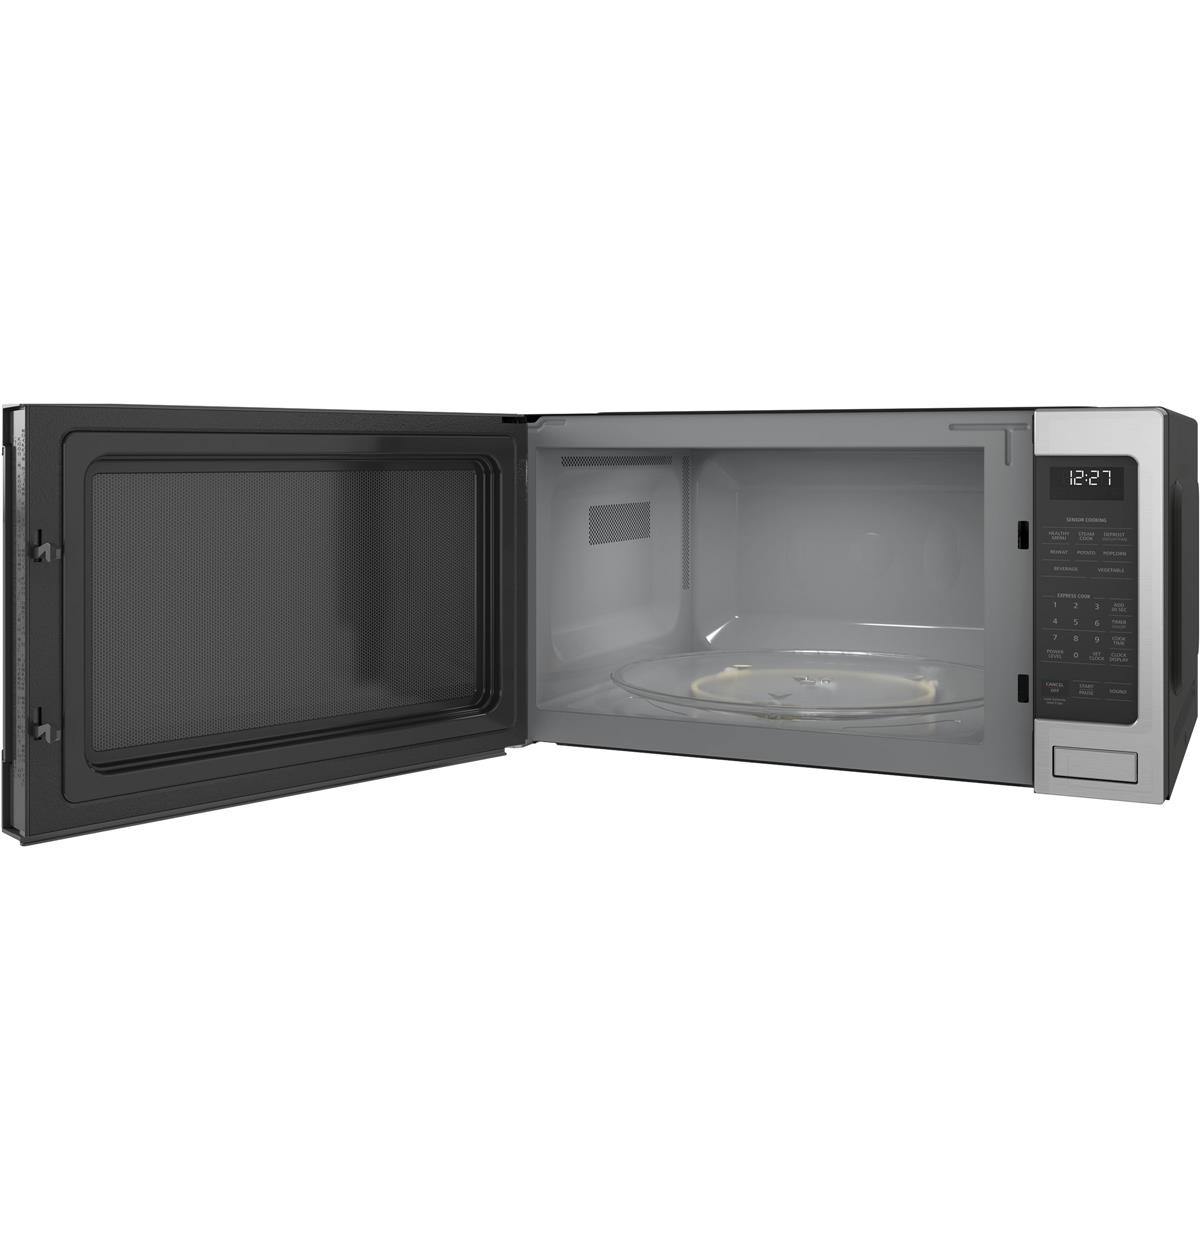 Monogram 2.2 countertop microwave oven